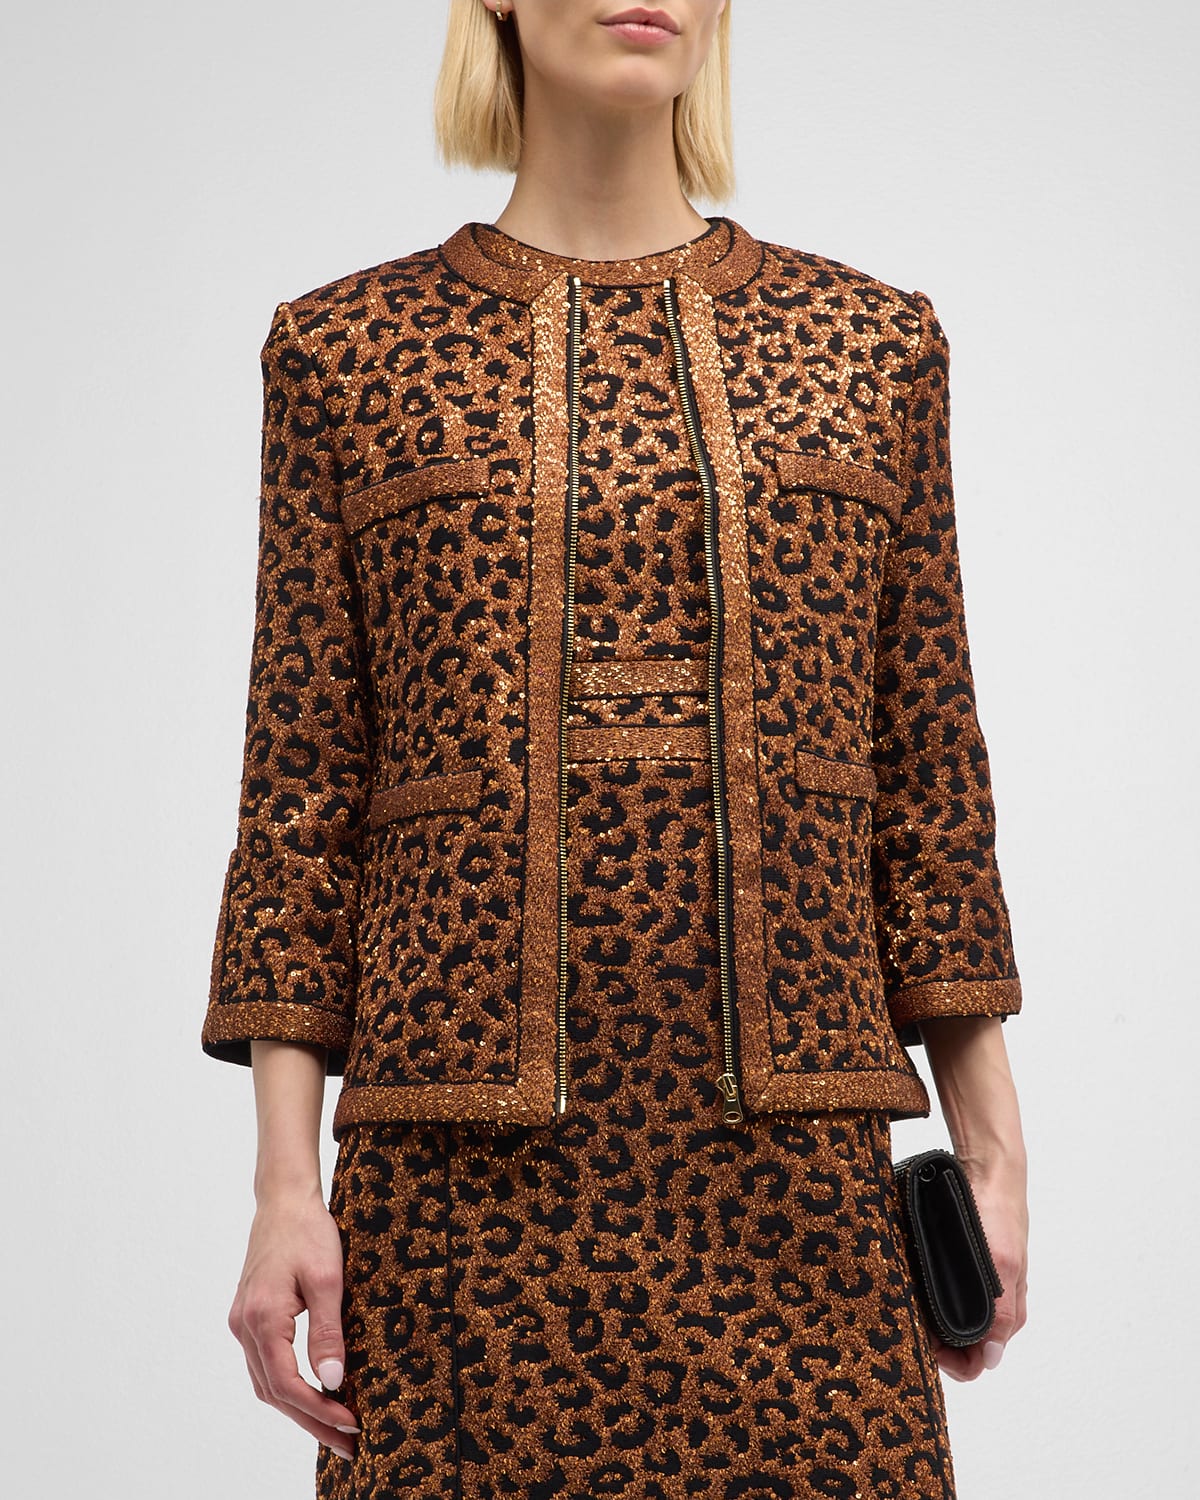 Leopard Paillette Knit Jacket